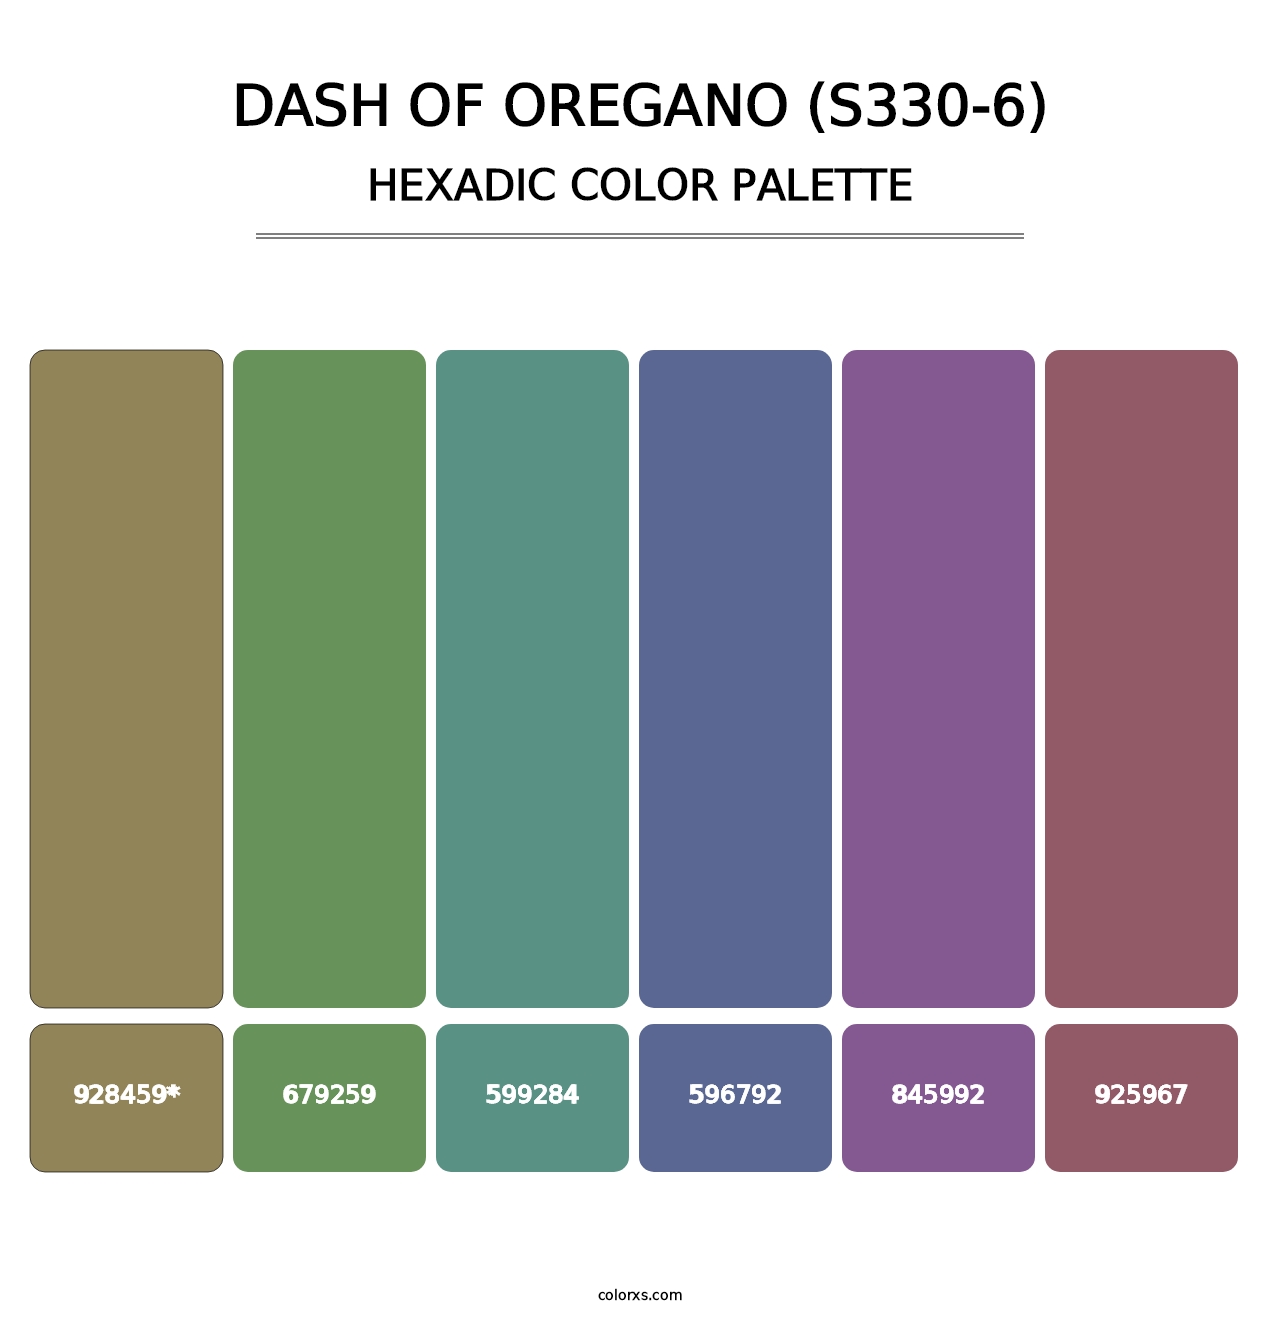 Dash Of Oregano (S330-6) - Hexadic Color Palette